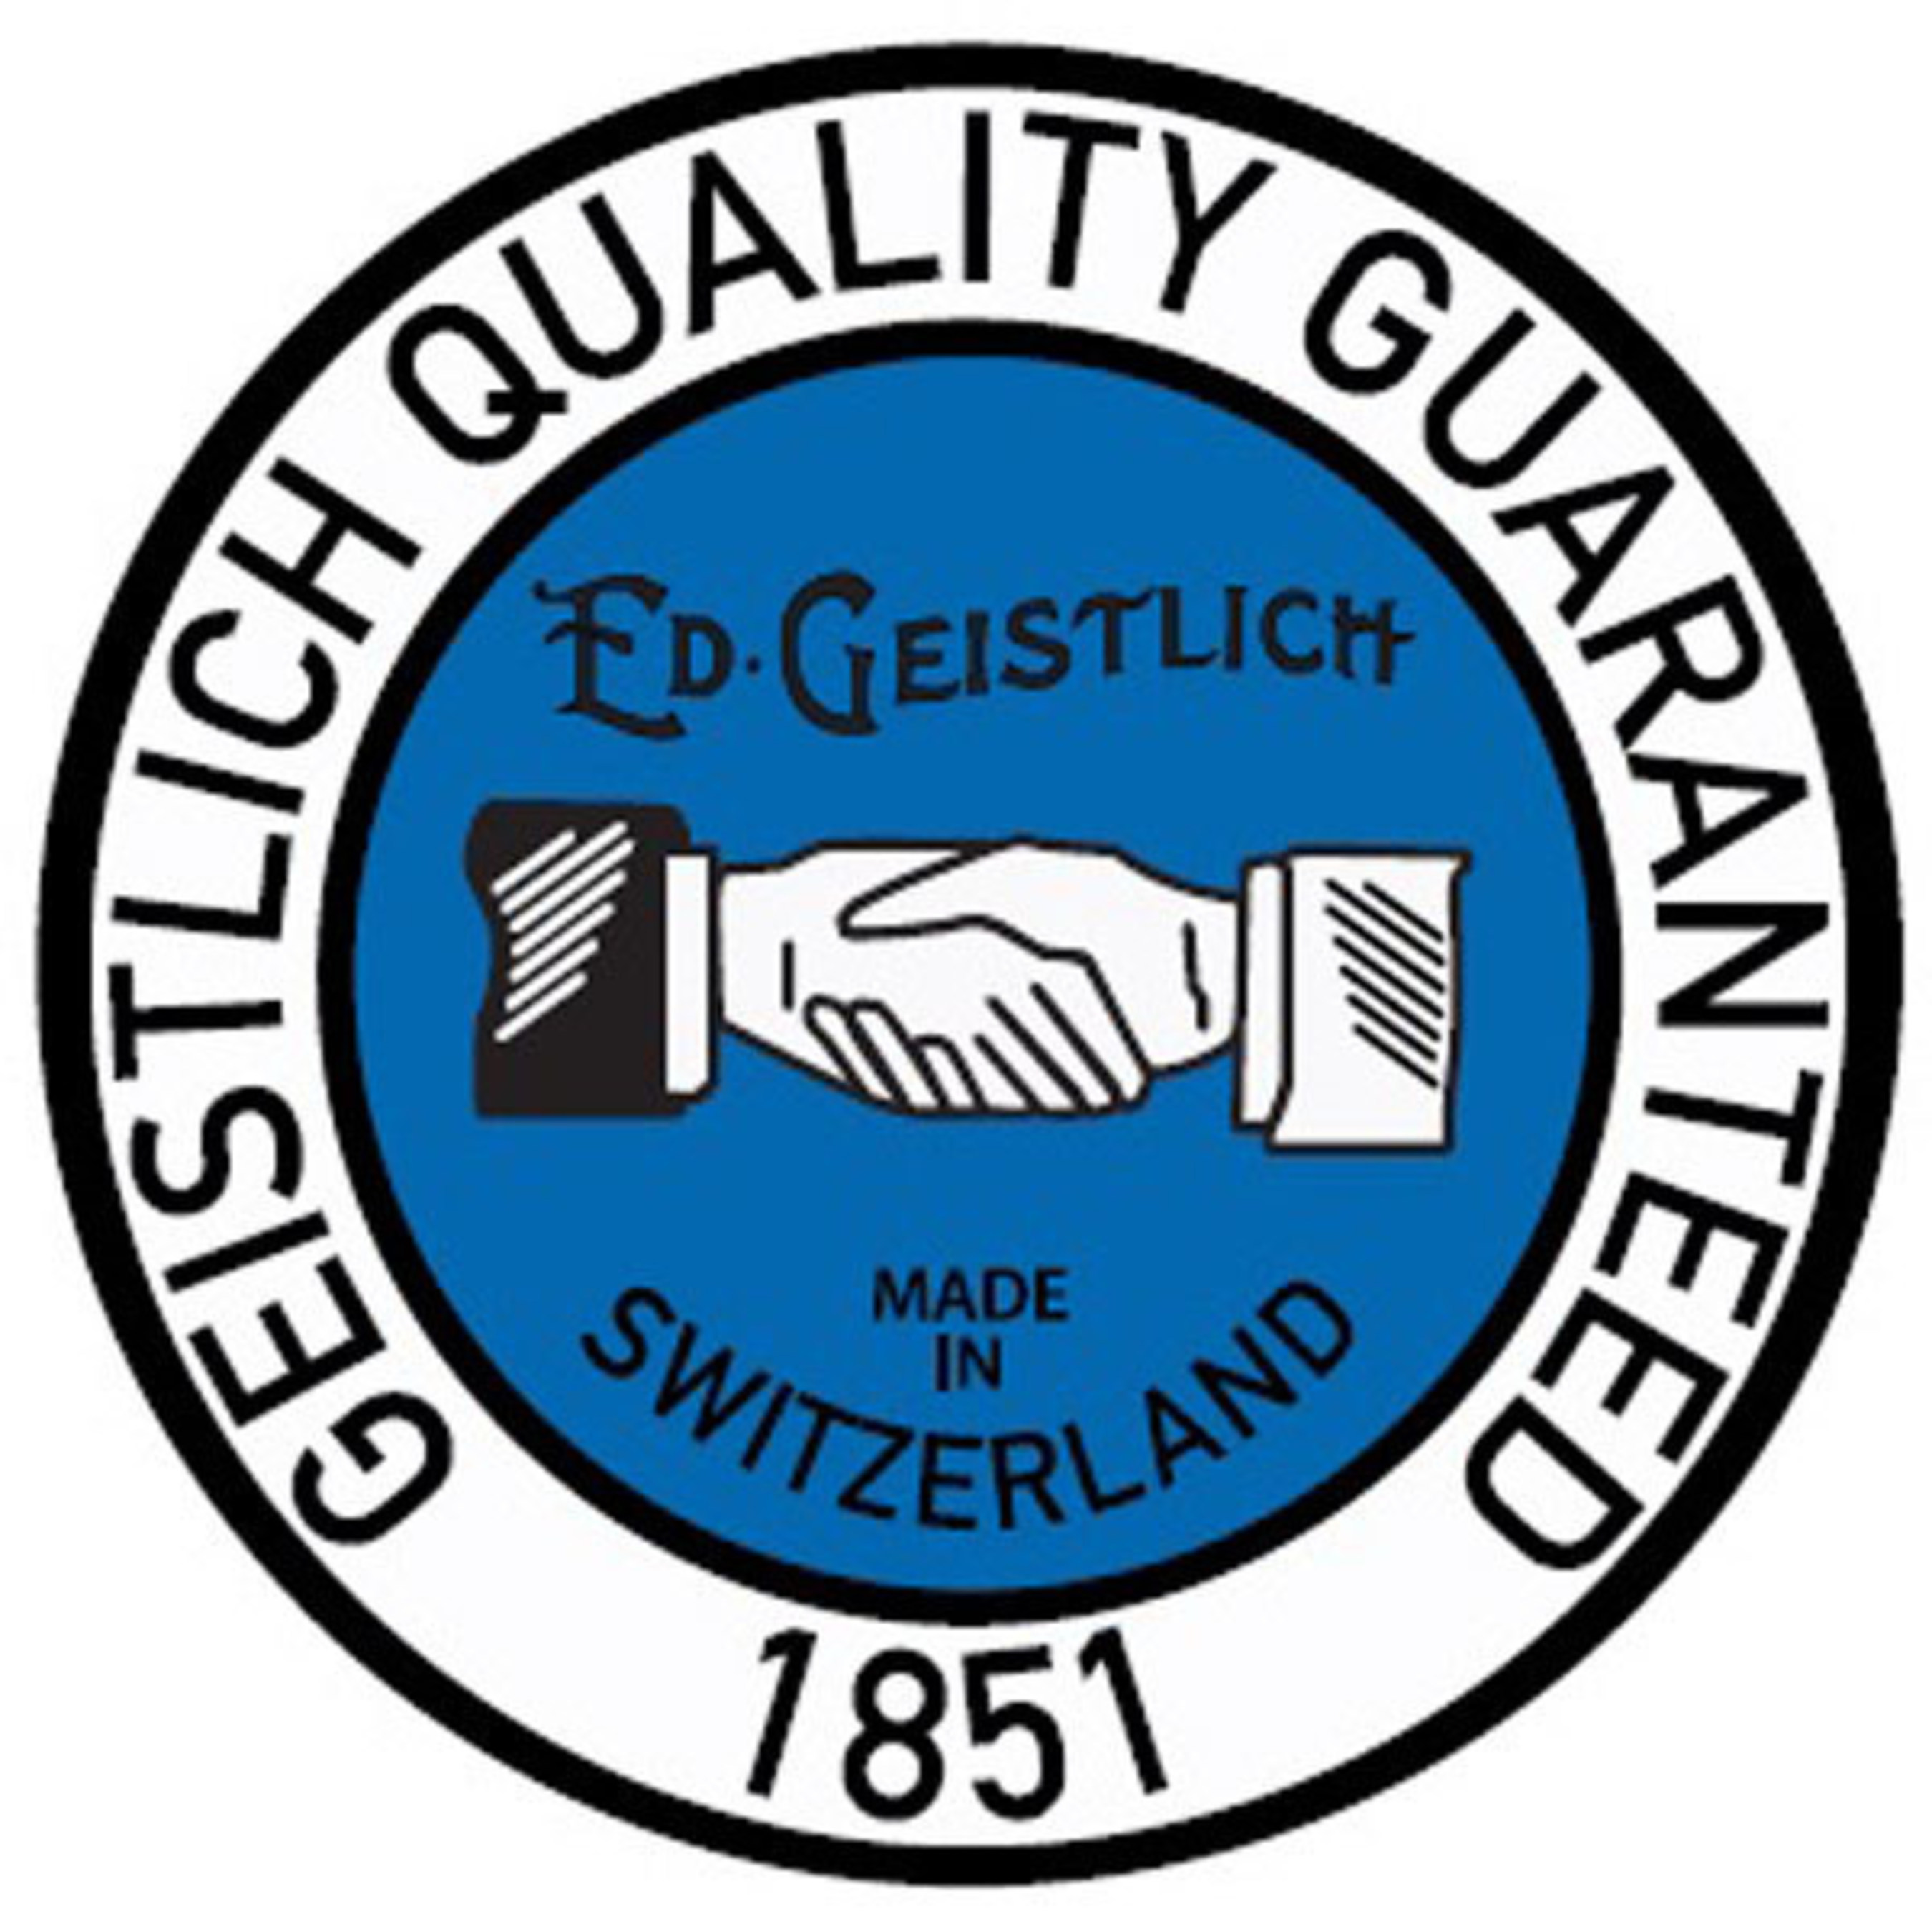 The Geistlich Guarantee